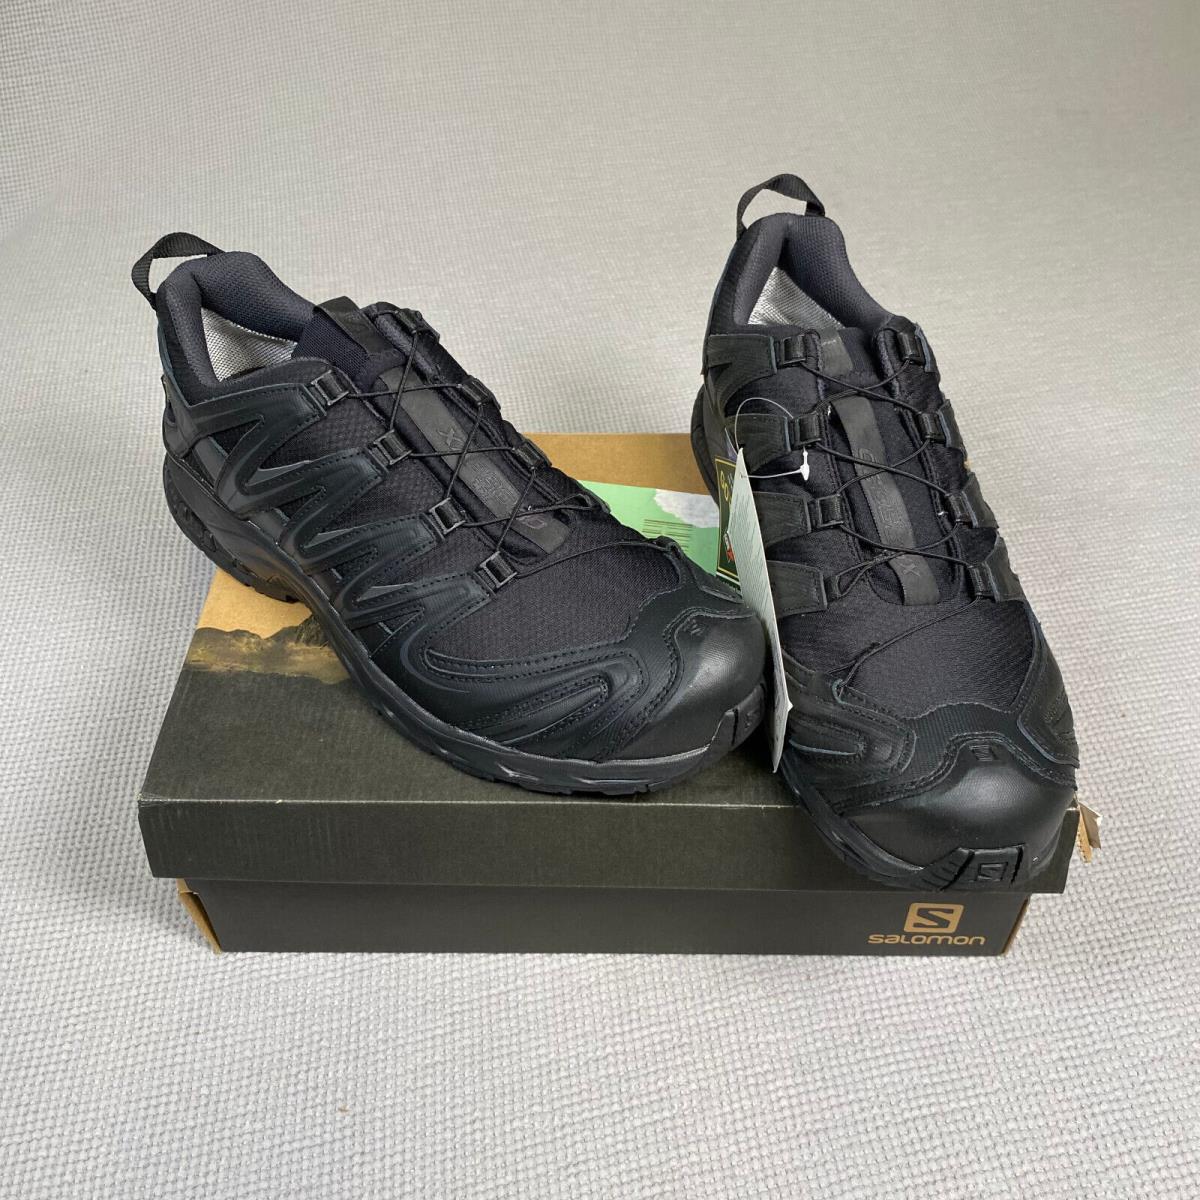 Salomon XA Pro 3D Gtx Forces Trail Running Assault Shoes Black Asphalt Size 12